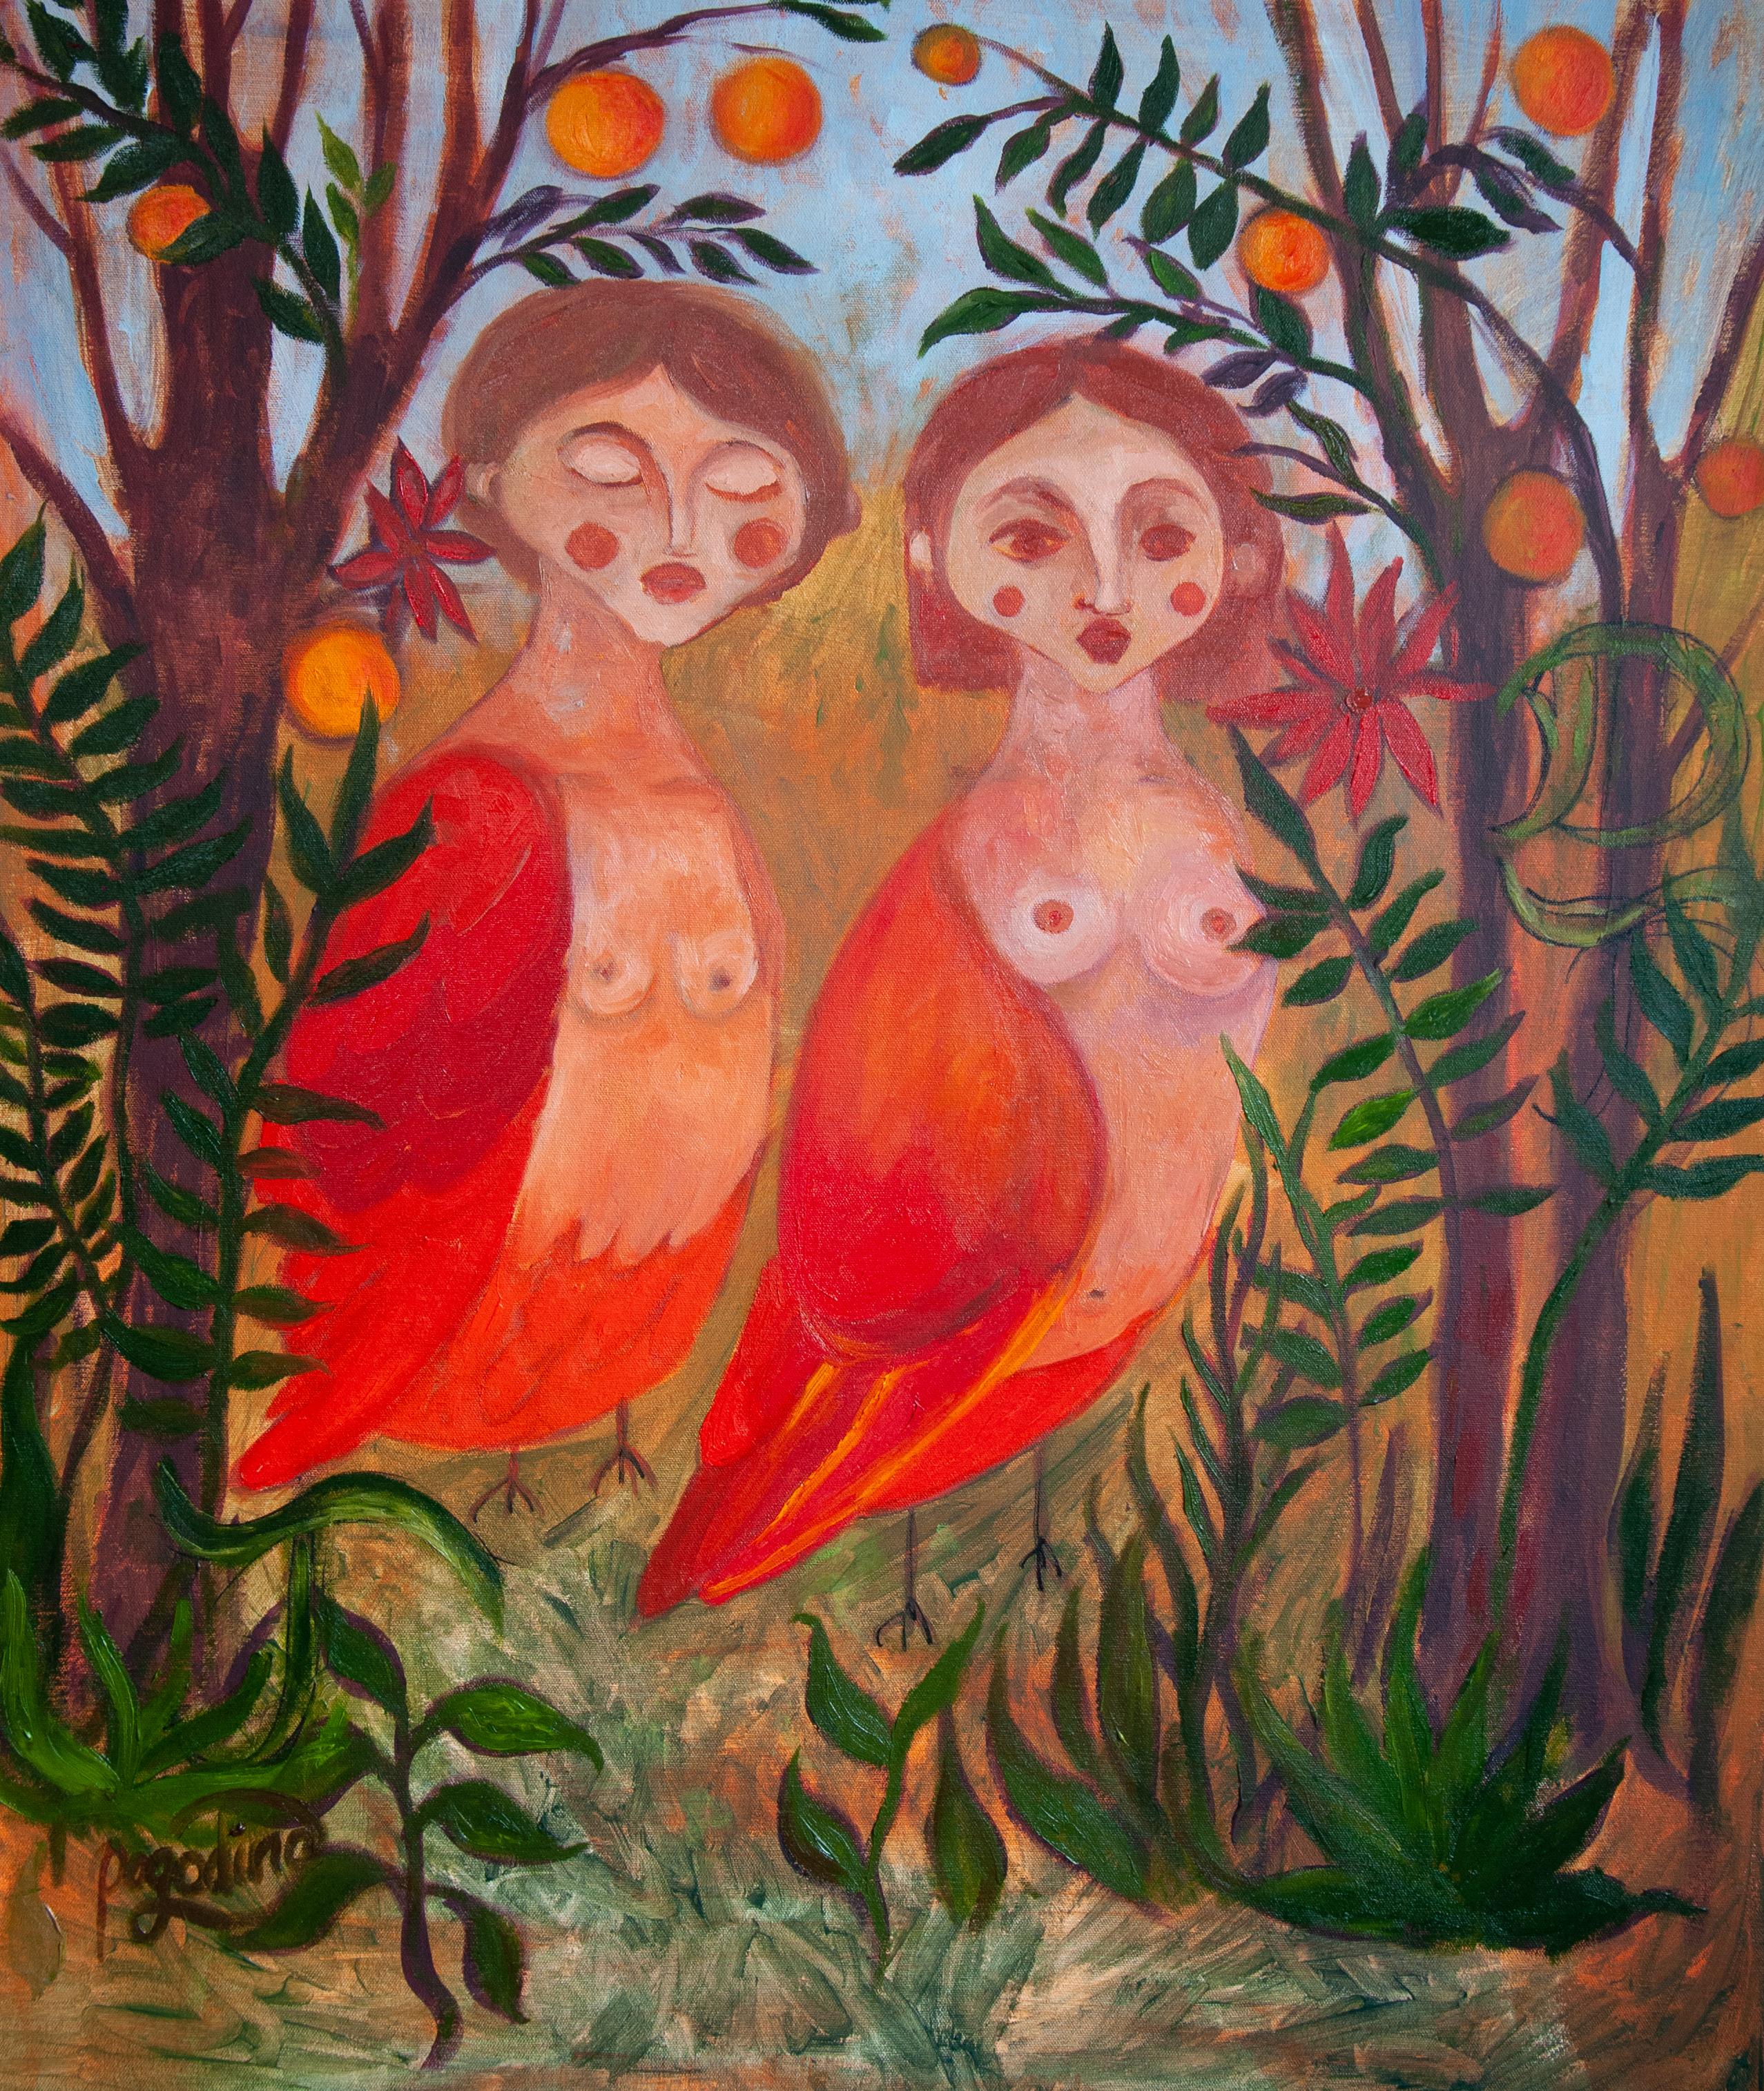 Femme nue de style art moderne Sirens, femme oiseau, toile, huile  - Gardiens de jardin 90x75 cm